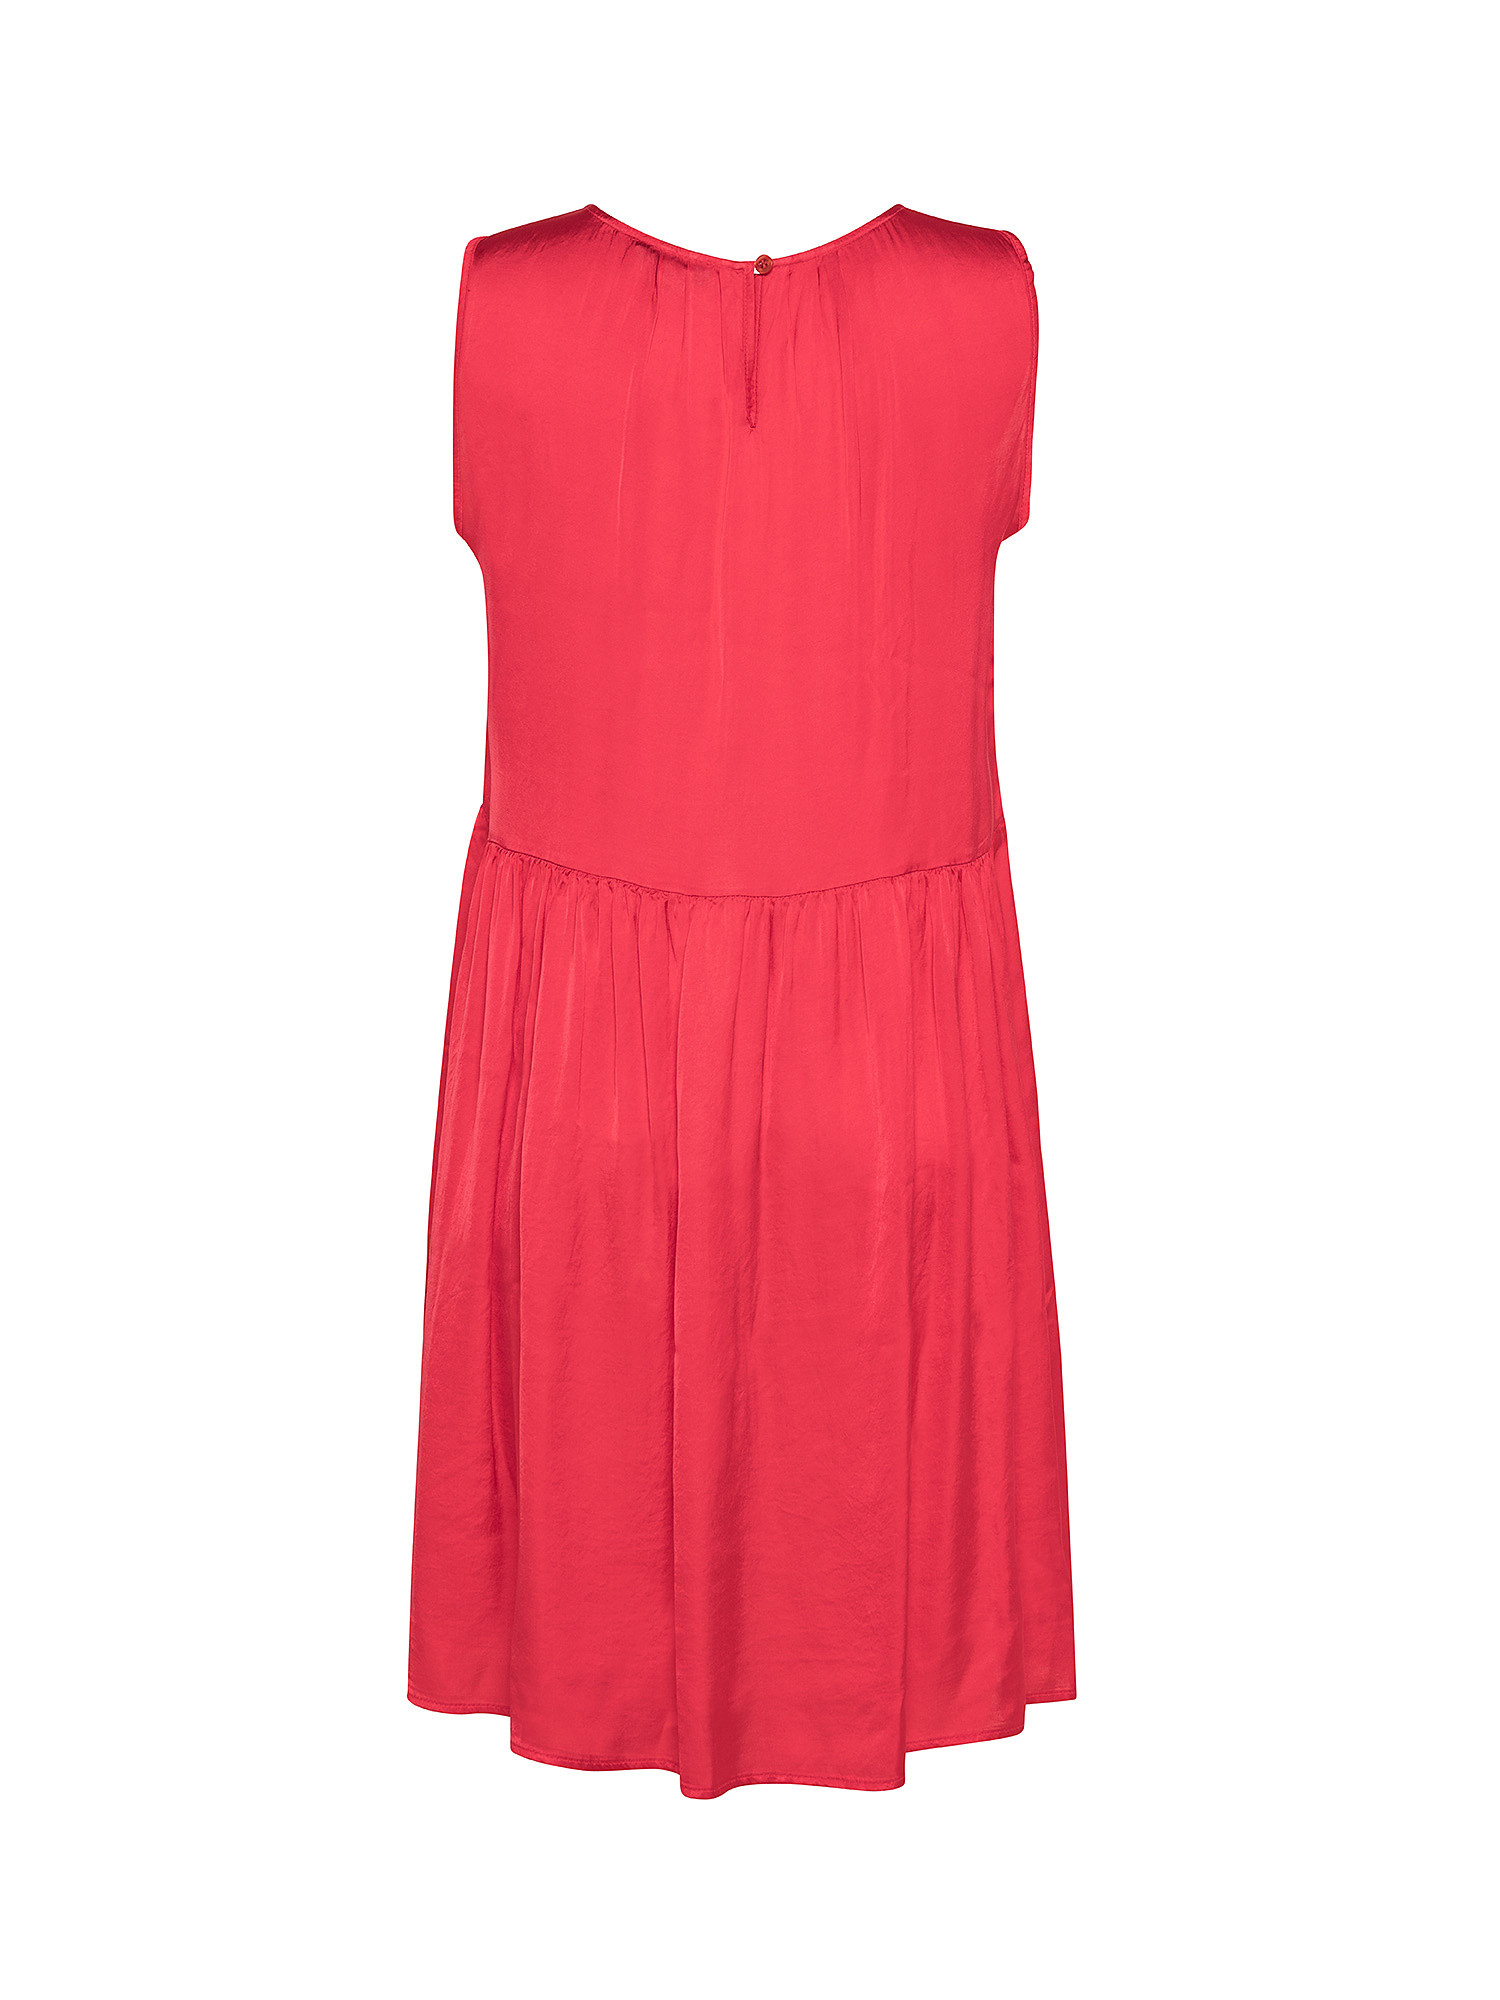 Dress, Red, large image number 1